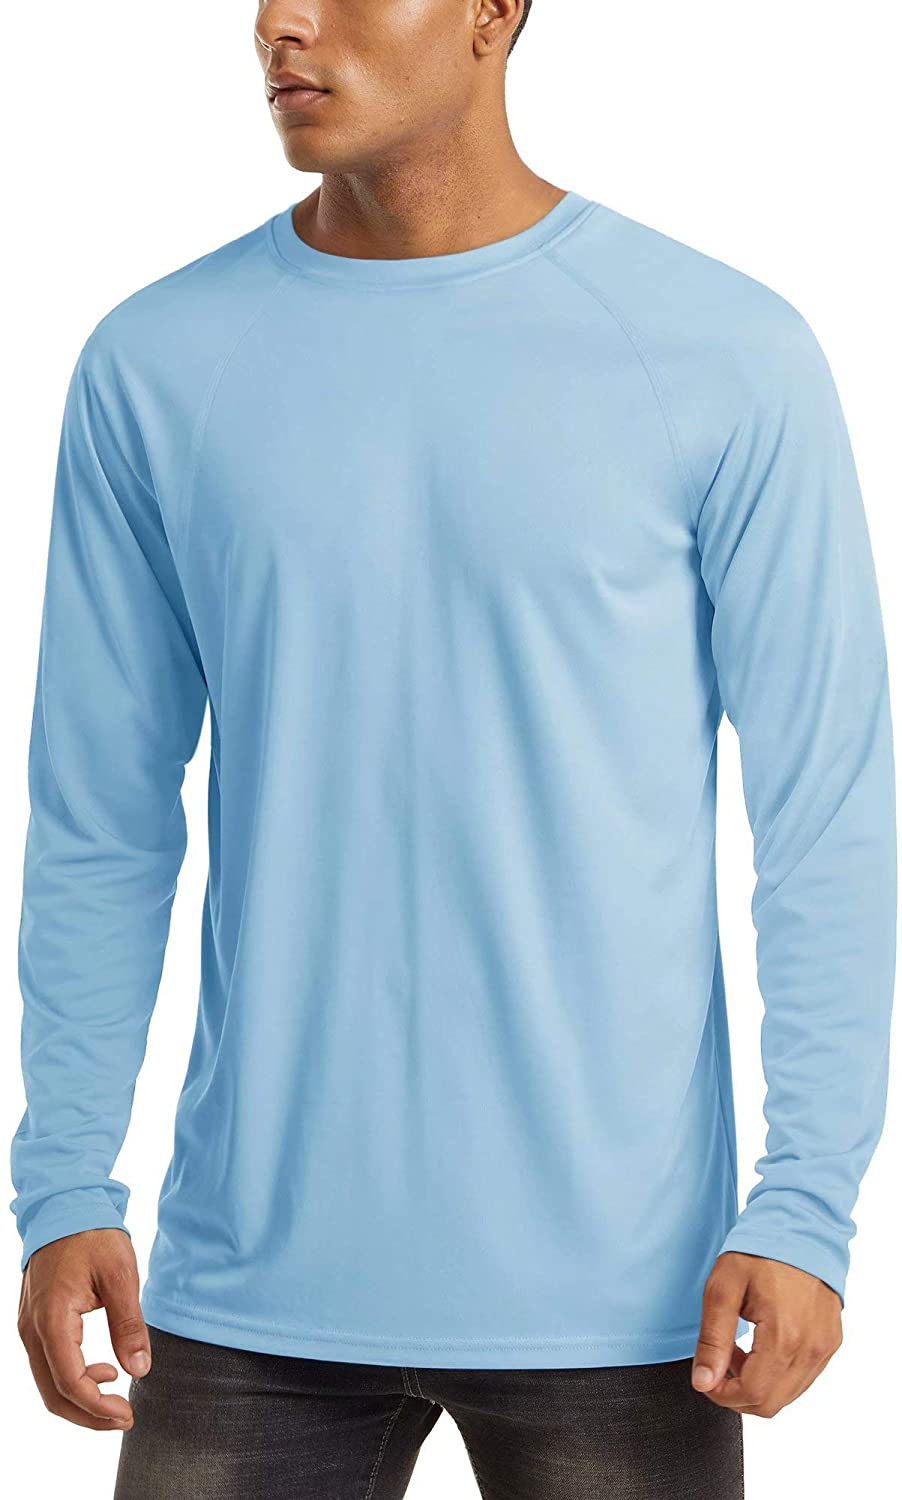 Men's UPF 50+ UV Long Sleeve Athletic Shirts - Cycorld Blue / M